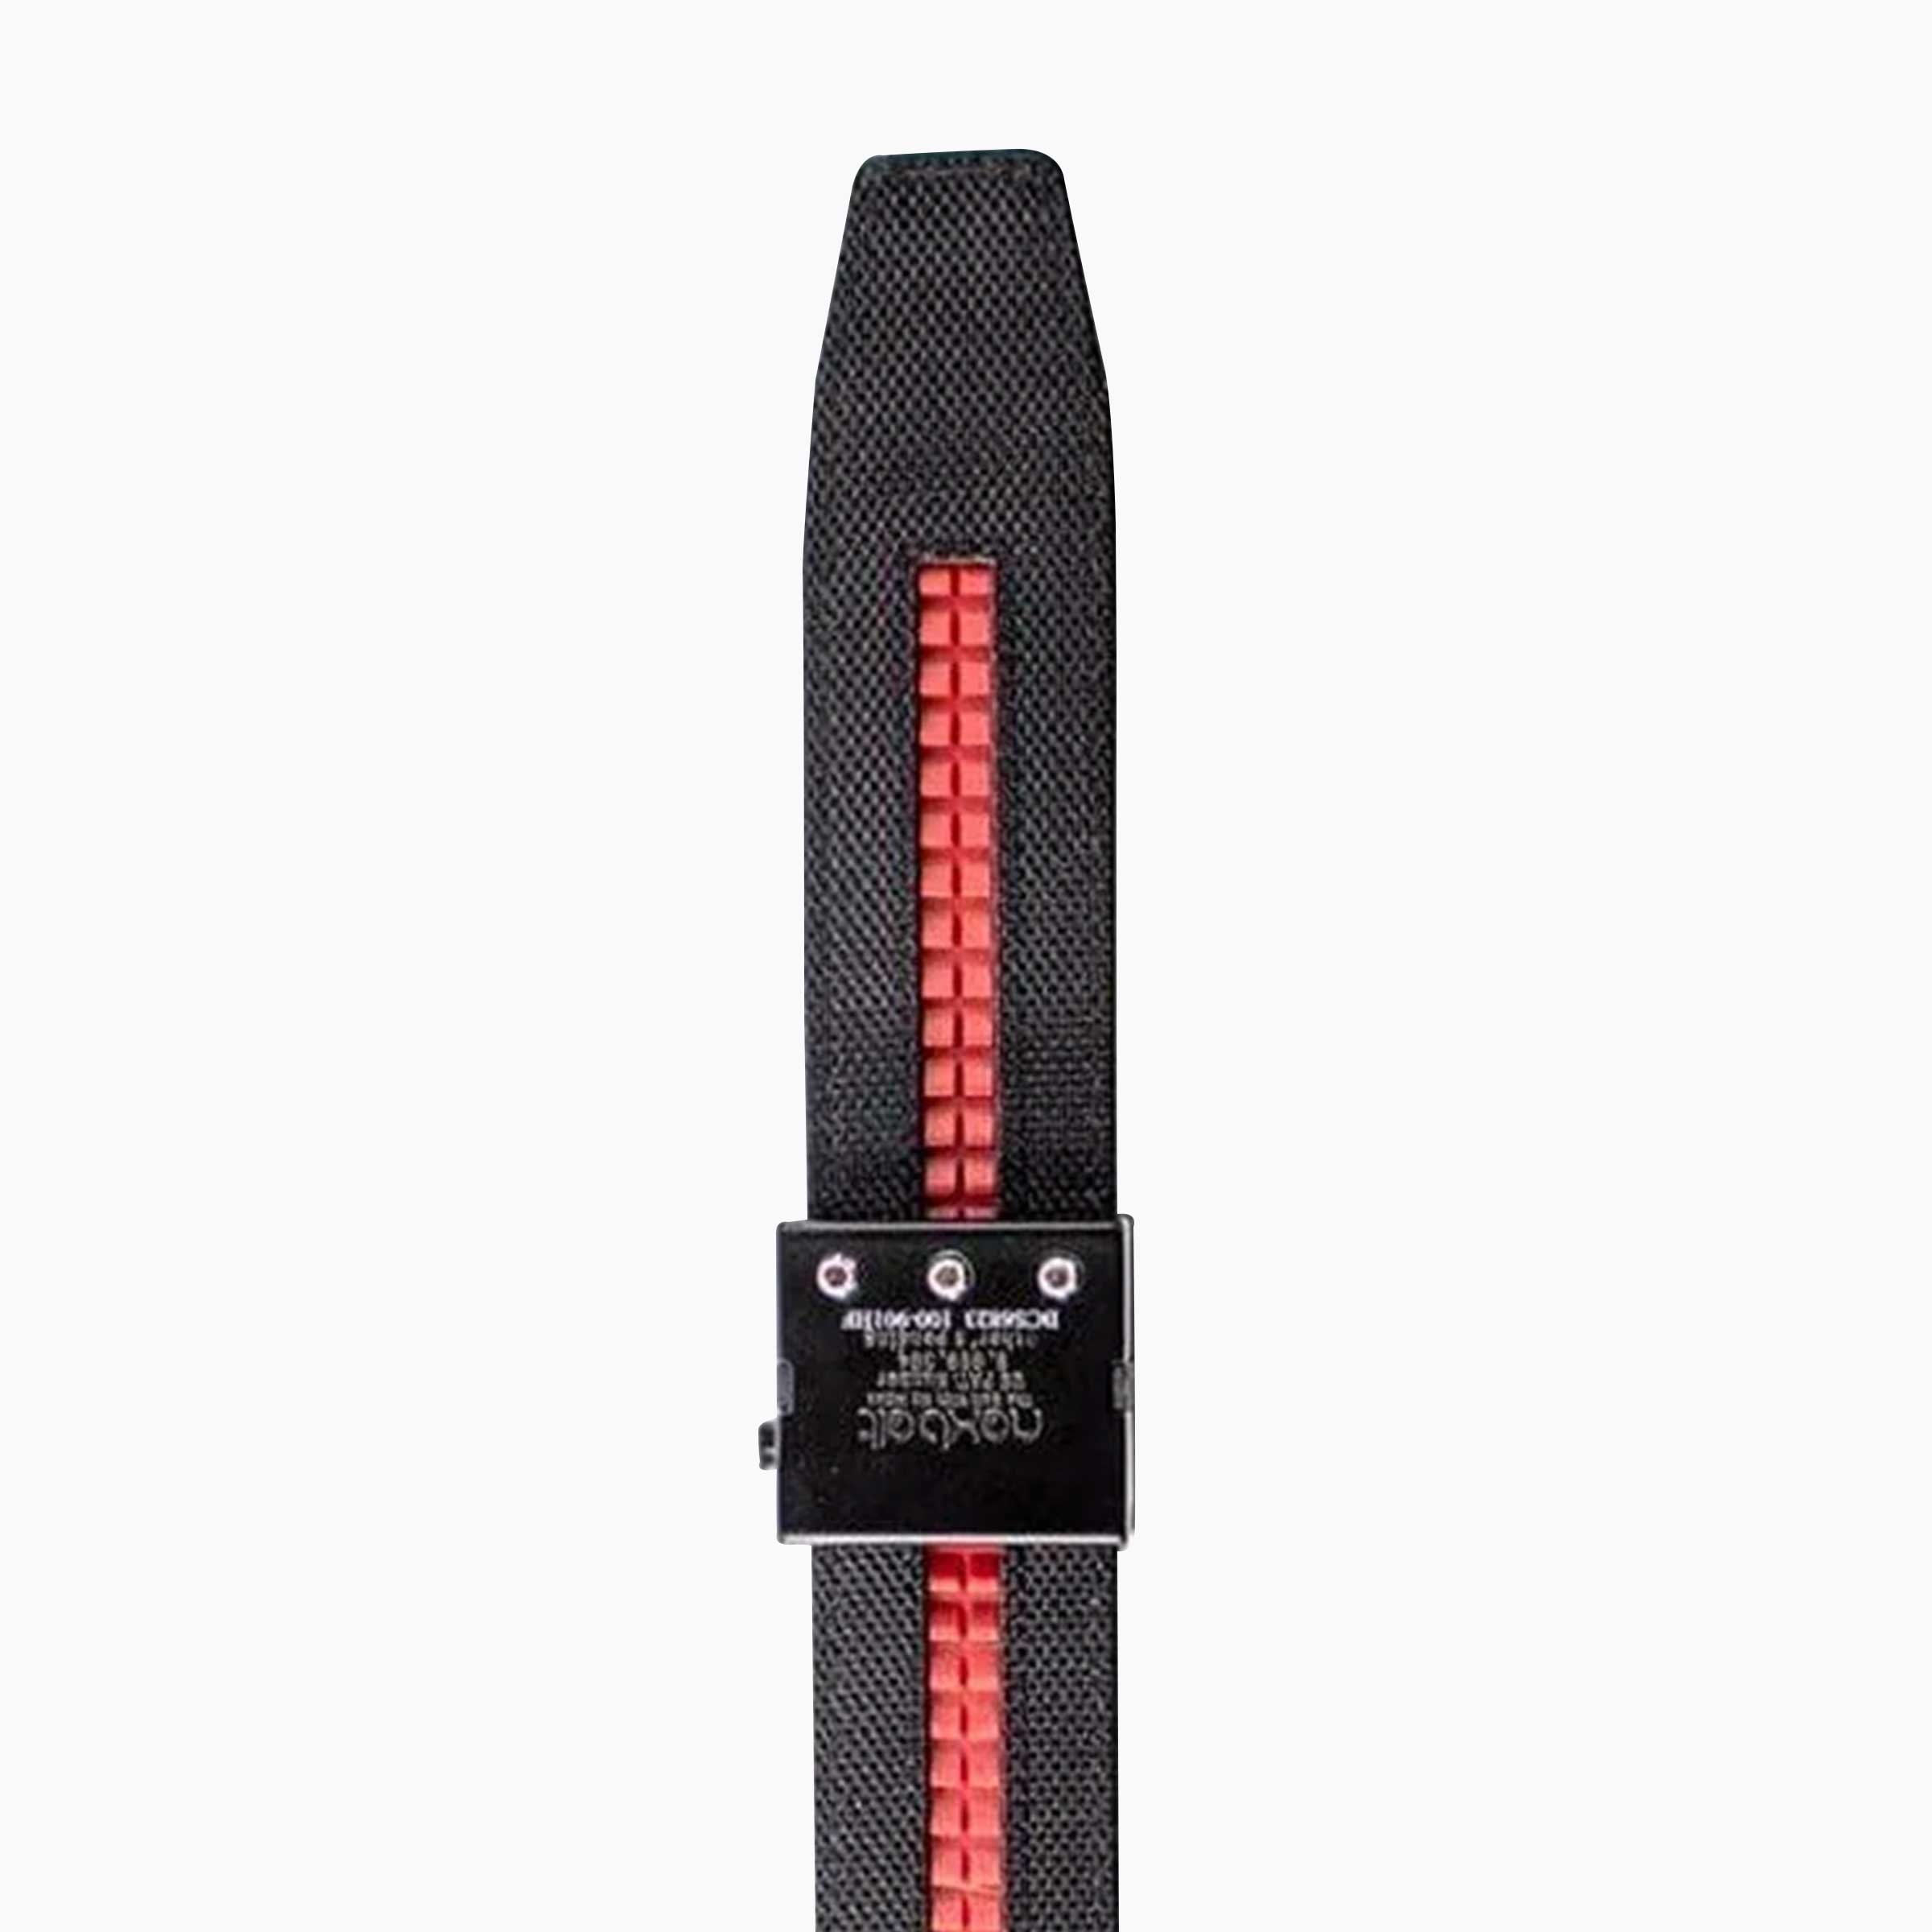 XL Supreme Black EDC Belt 1.5" [38mm]